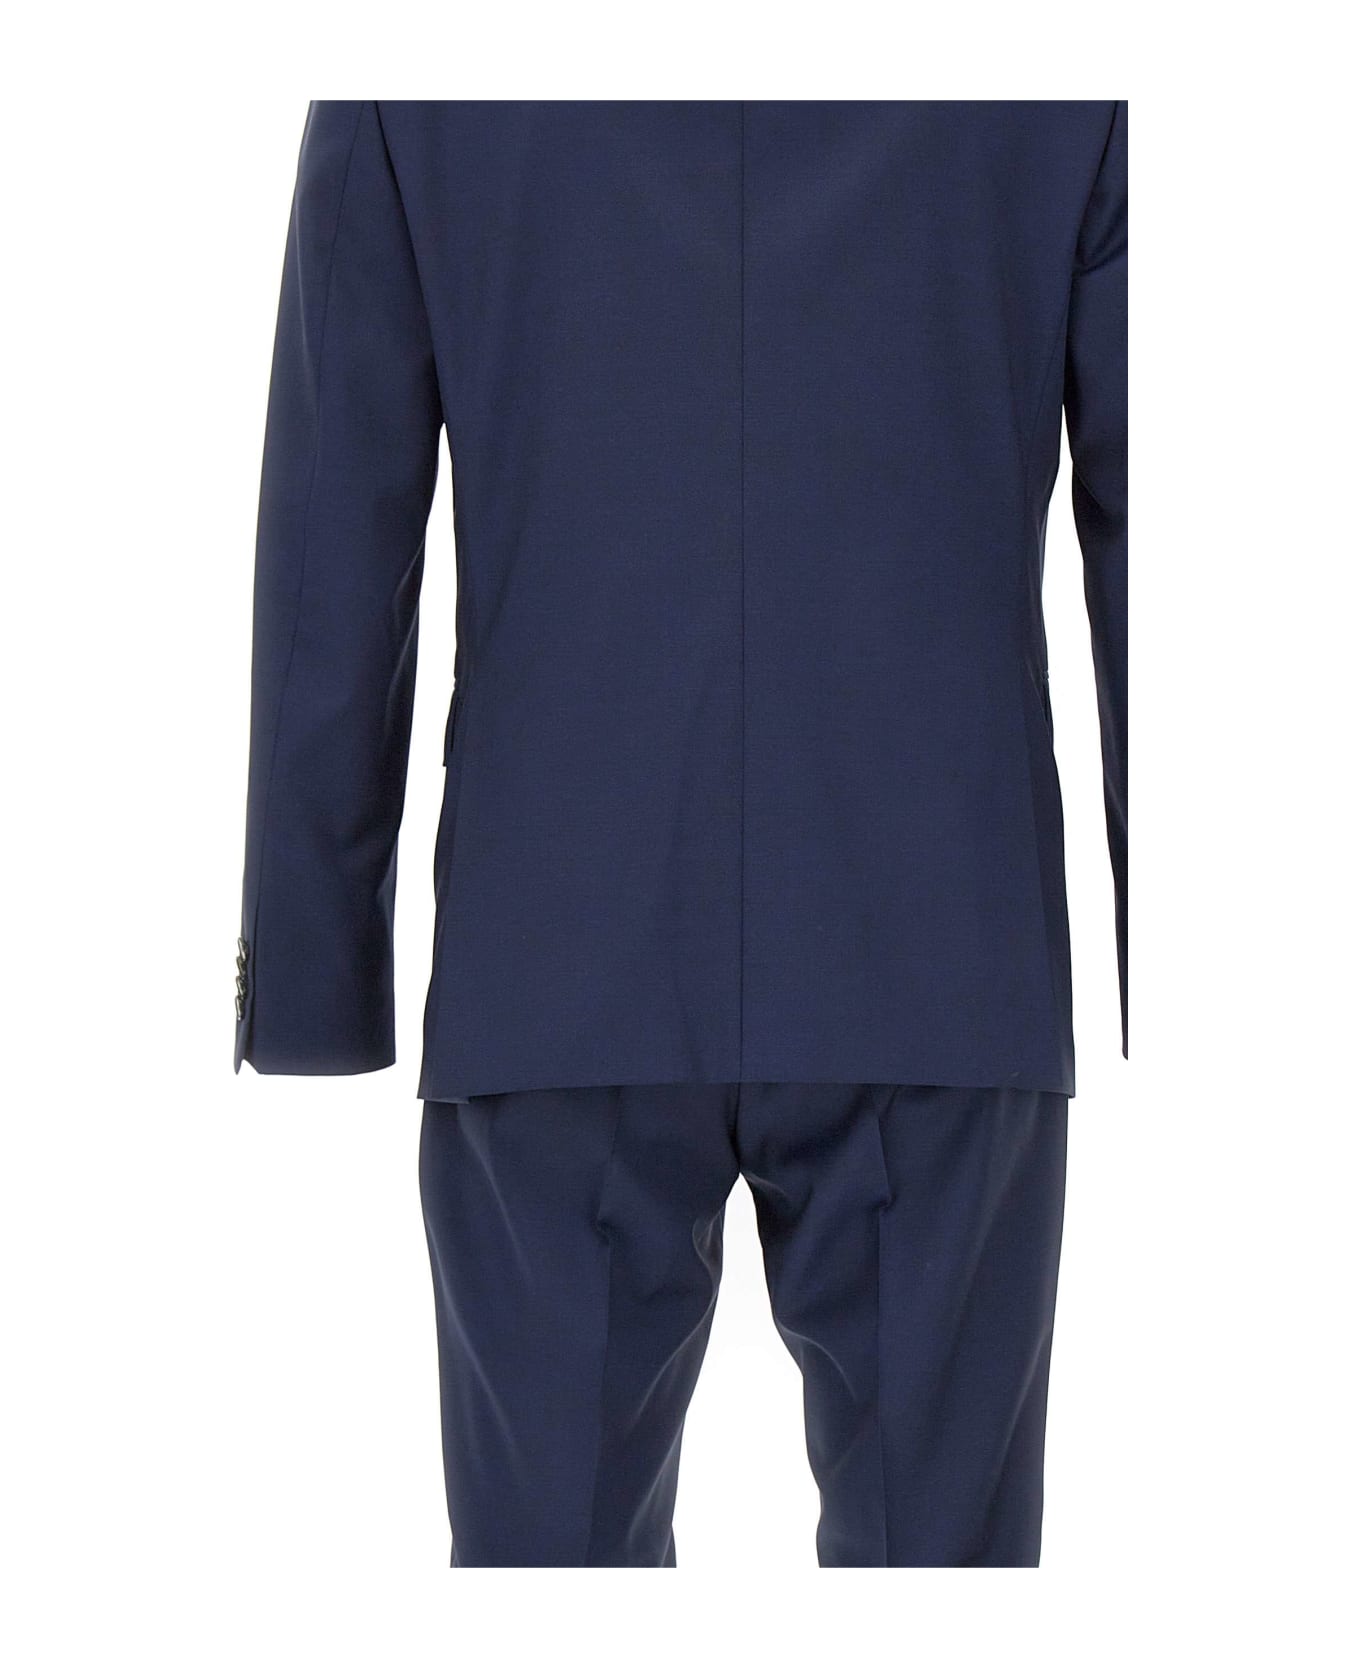 Hugo Boss "h-reymond" Two-piece Wool Suit - BLUE